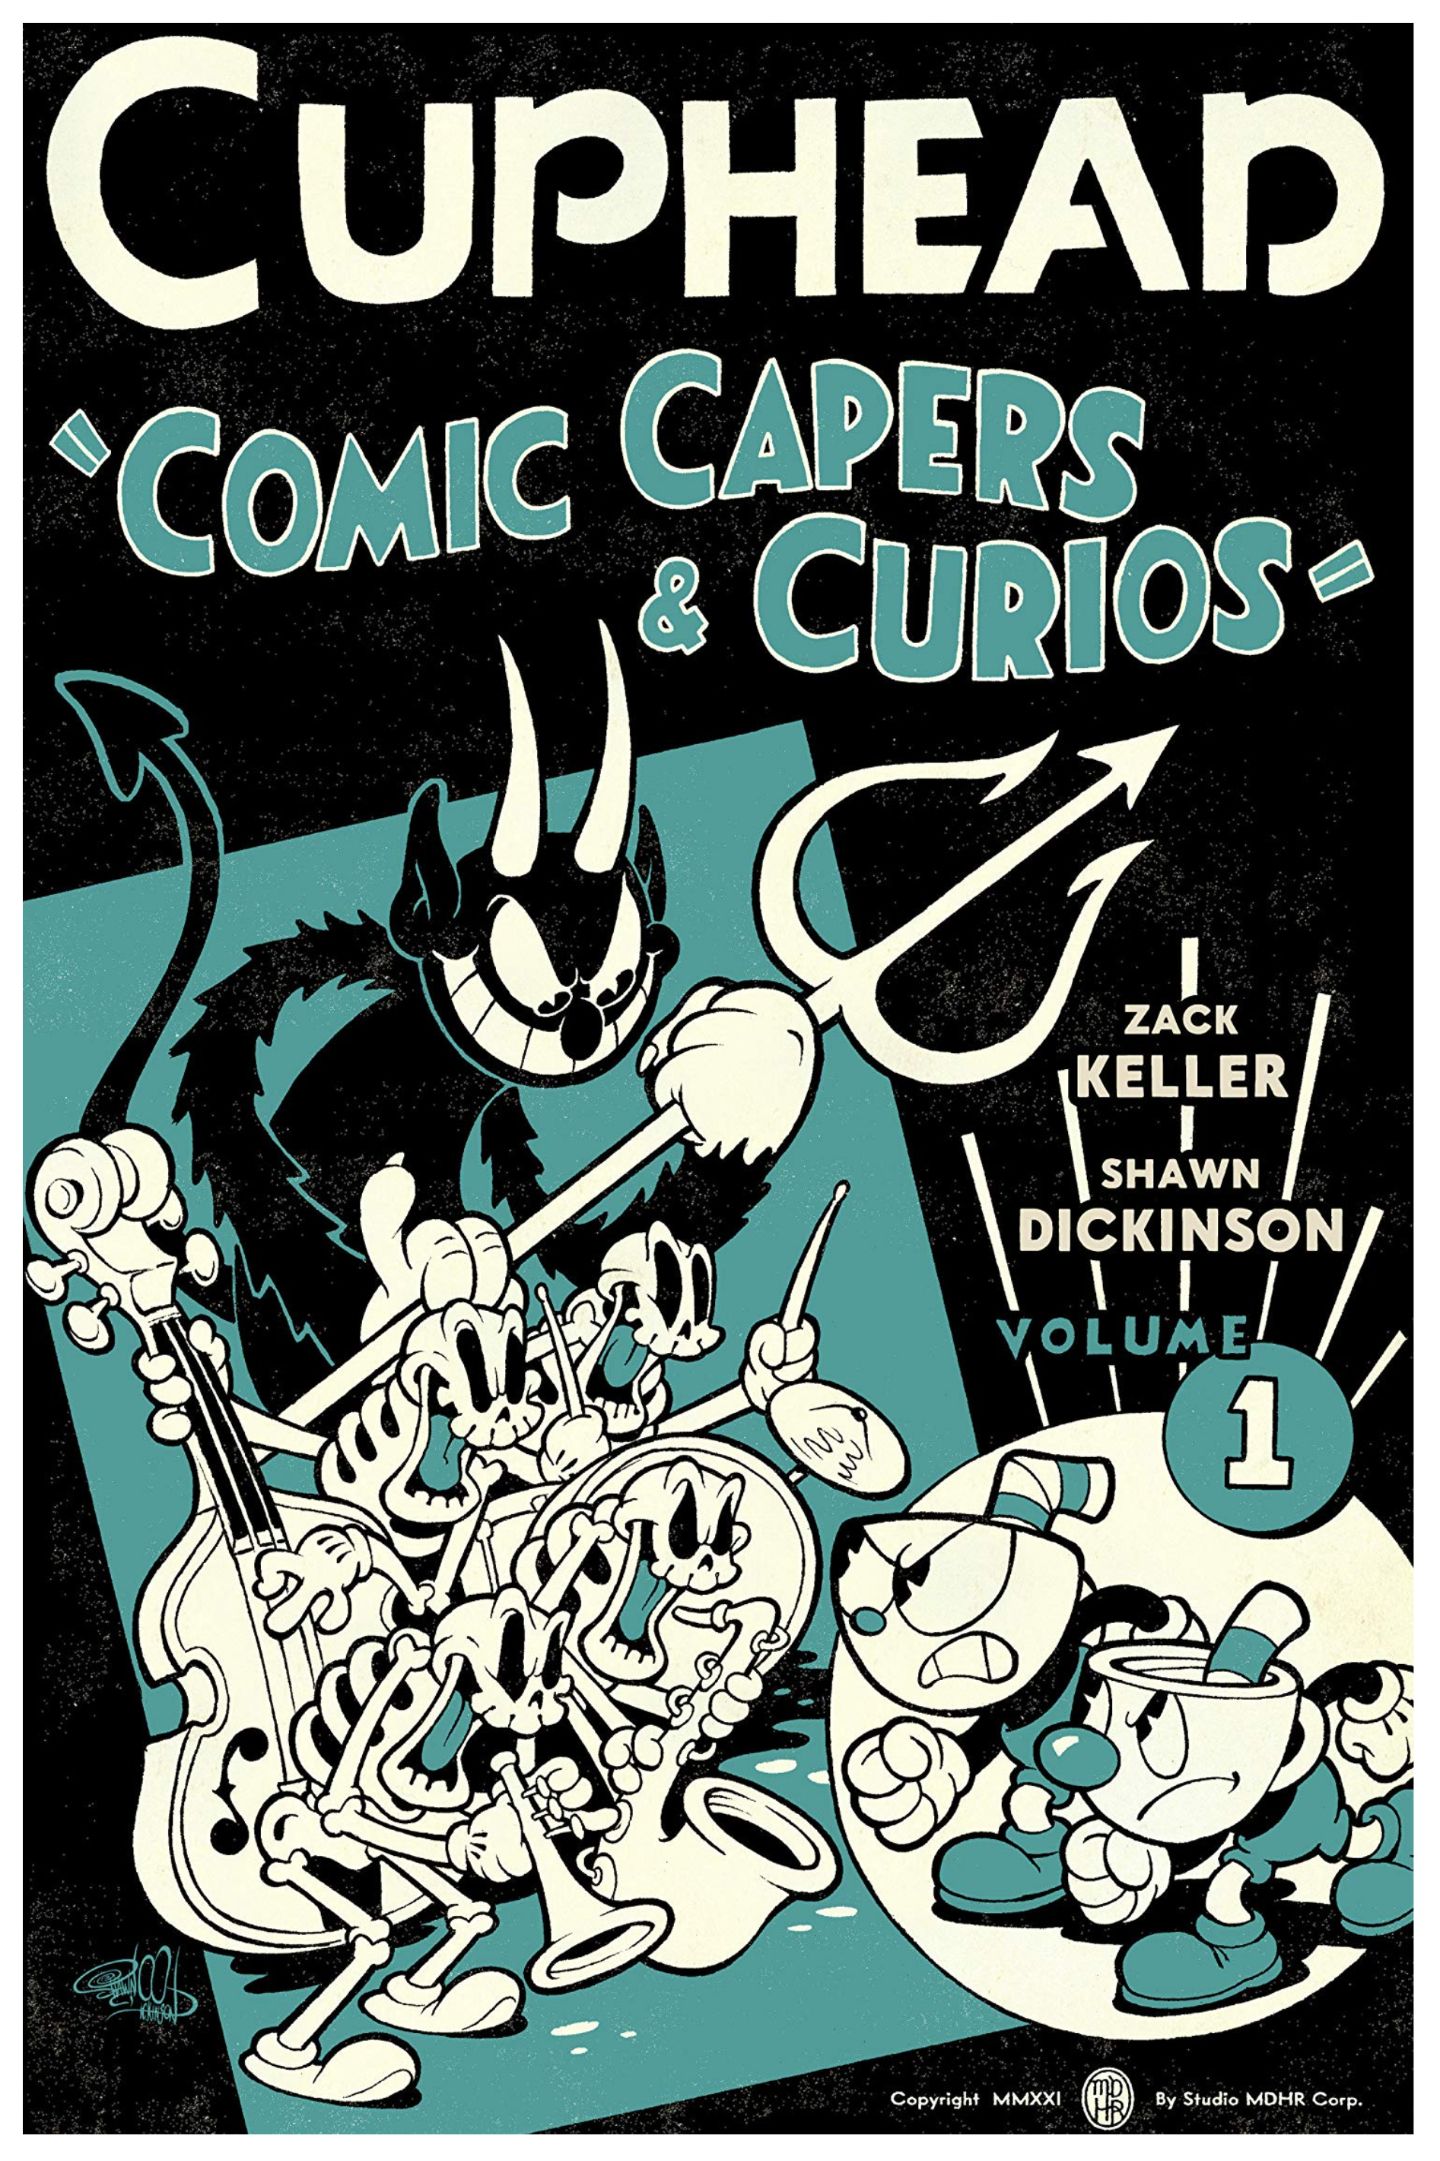 cup head vol 1 comic capers and curios